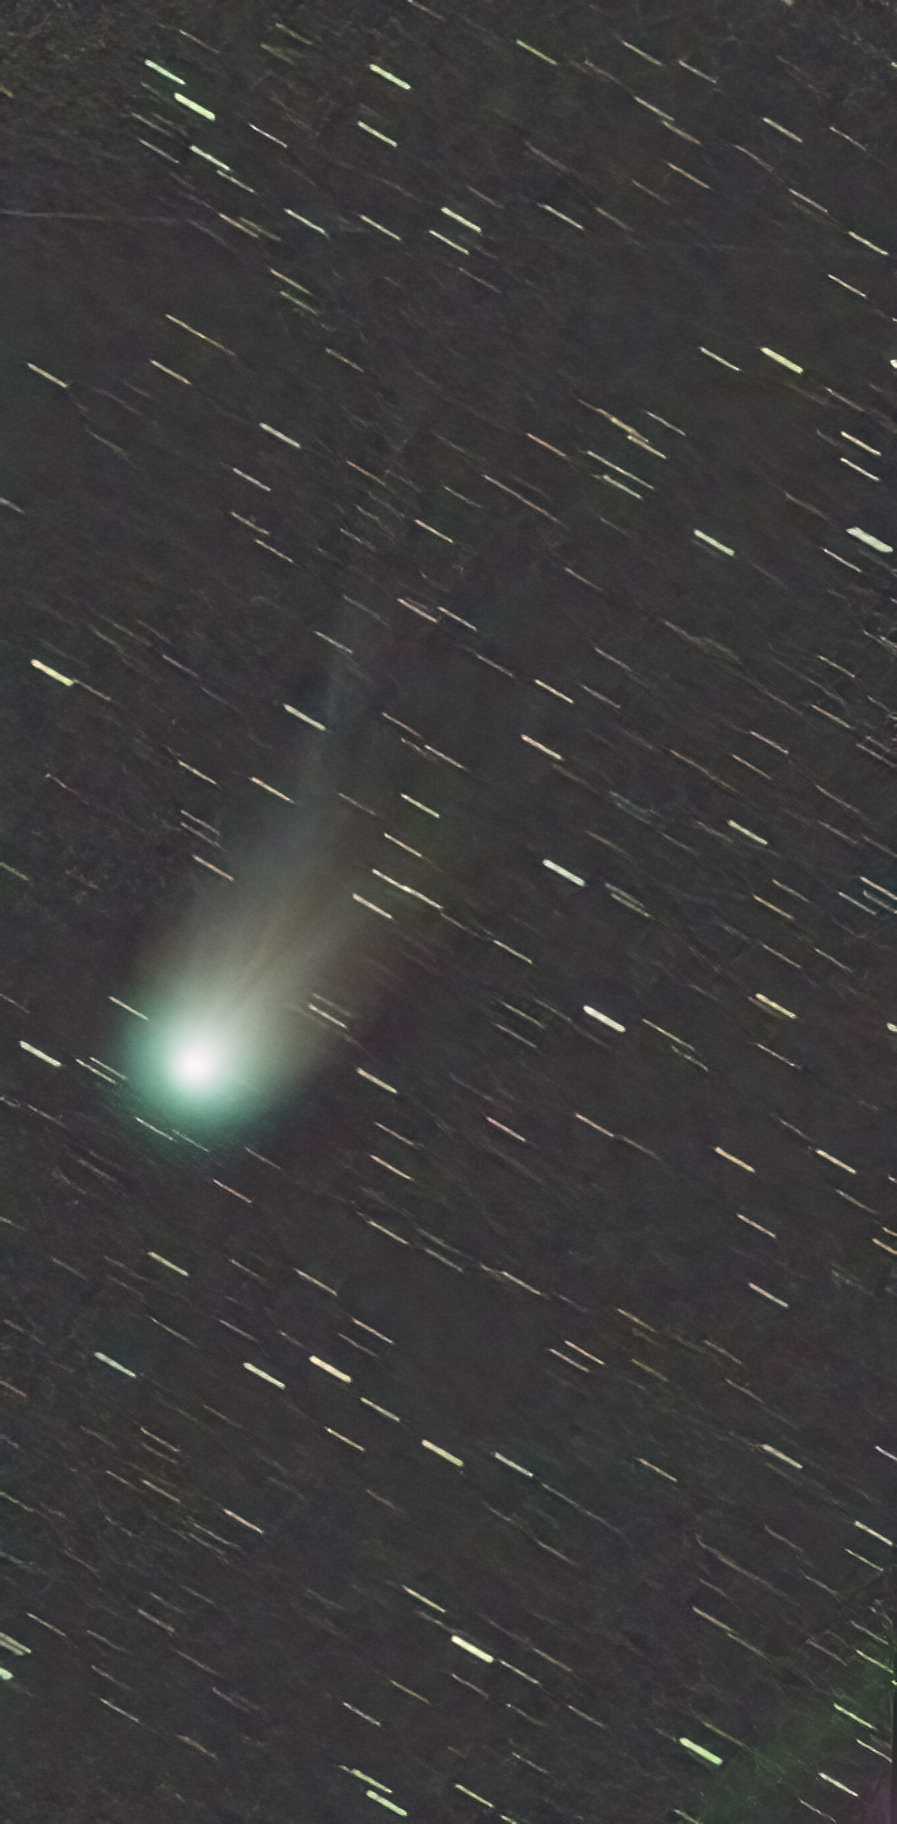 Komet 12P/Pons-Brooks